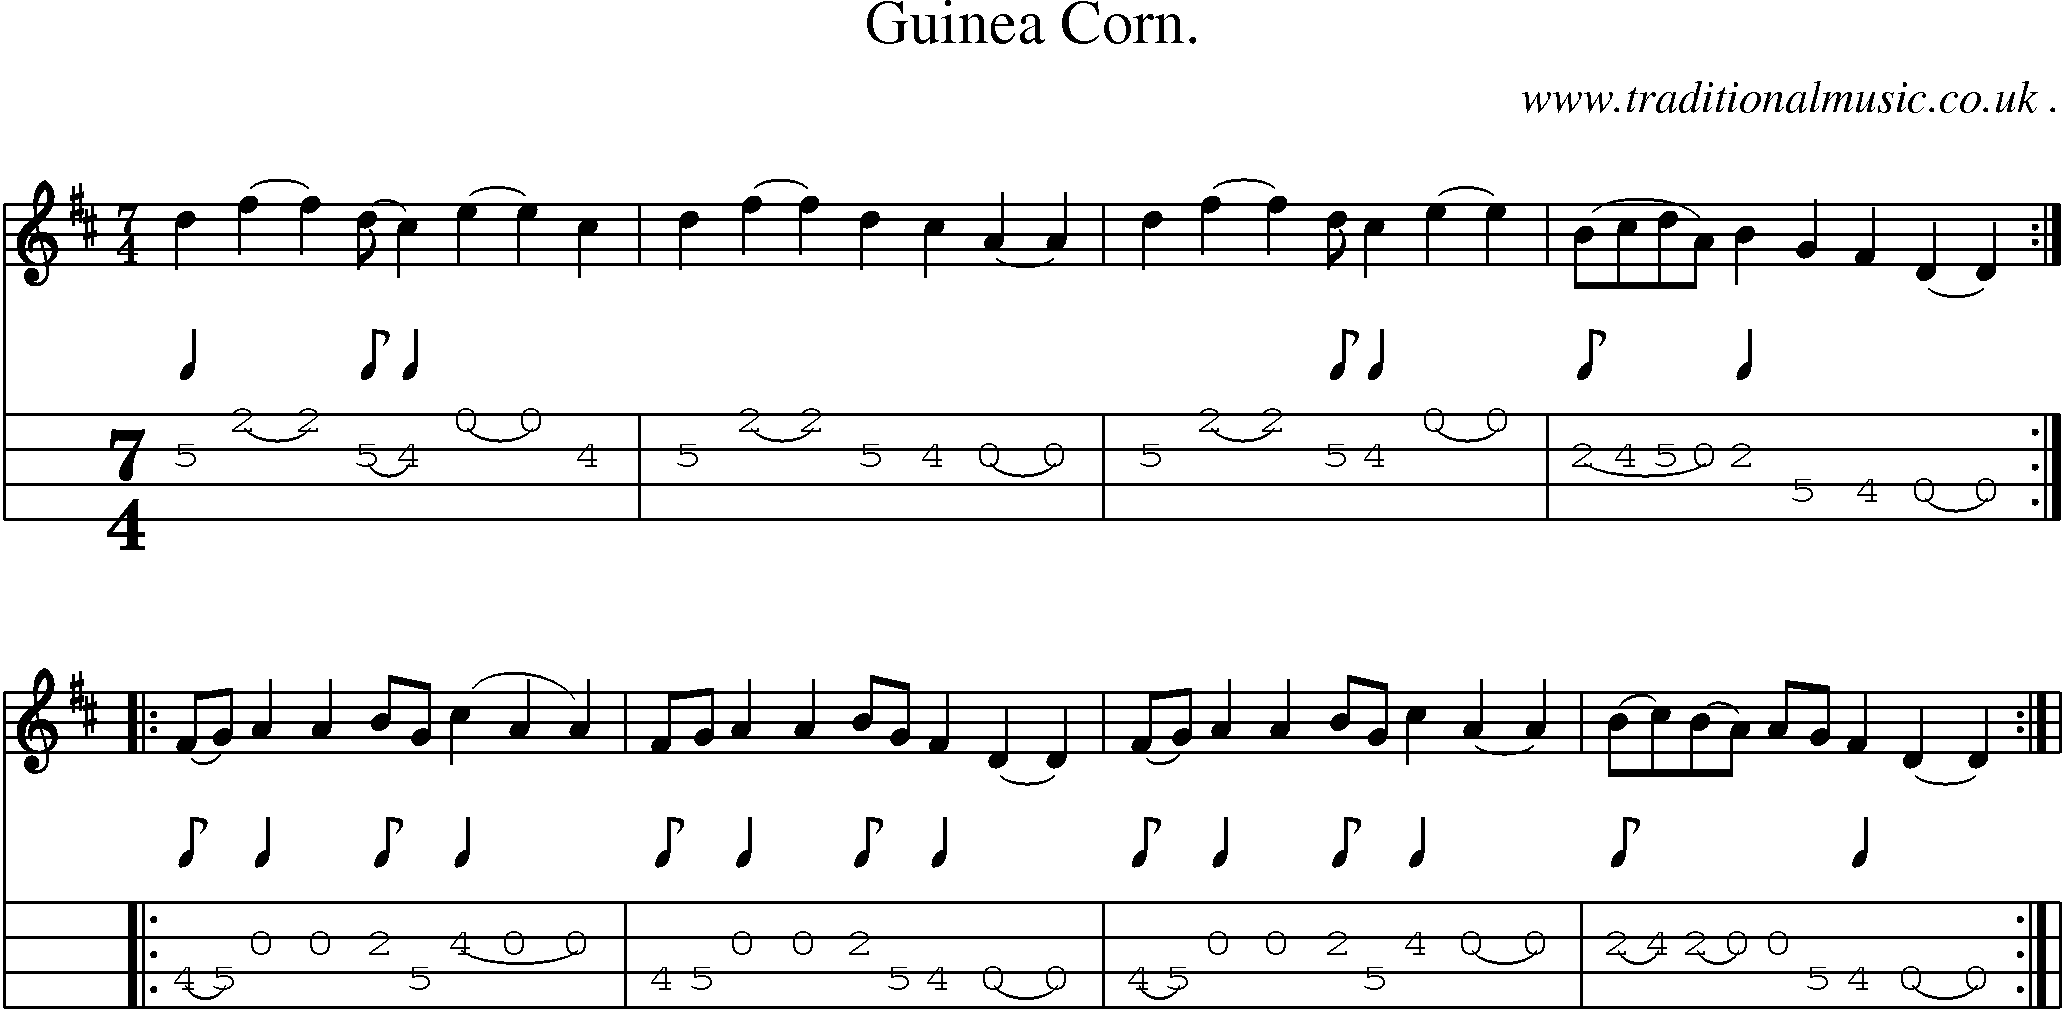 Sheet-Music and Mandolin Tabs for Guinea Corn